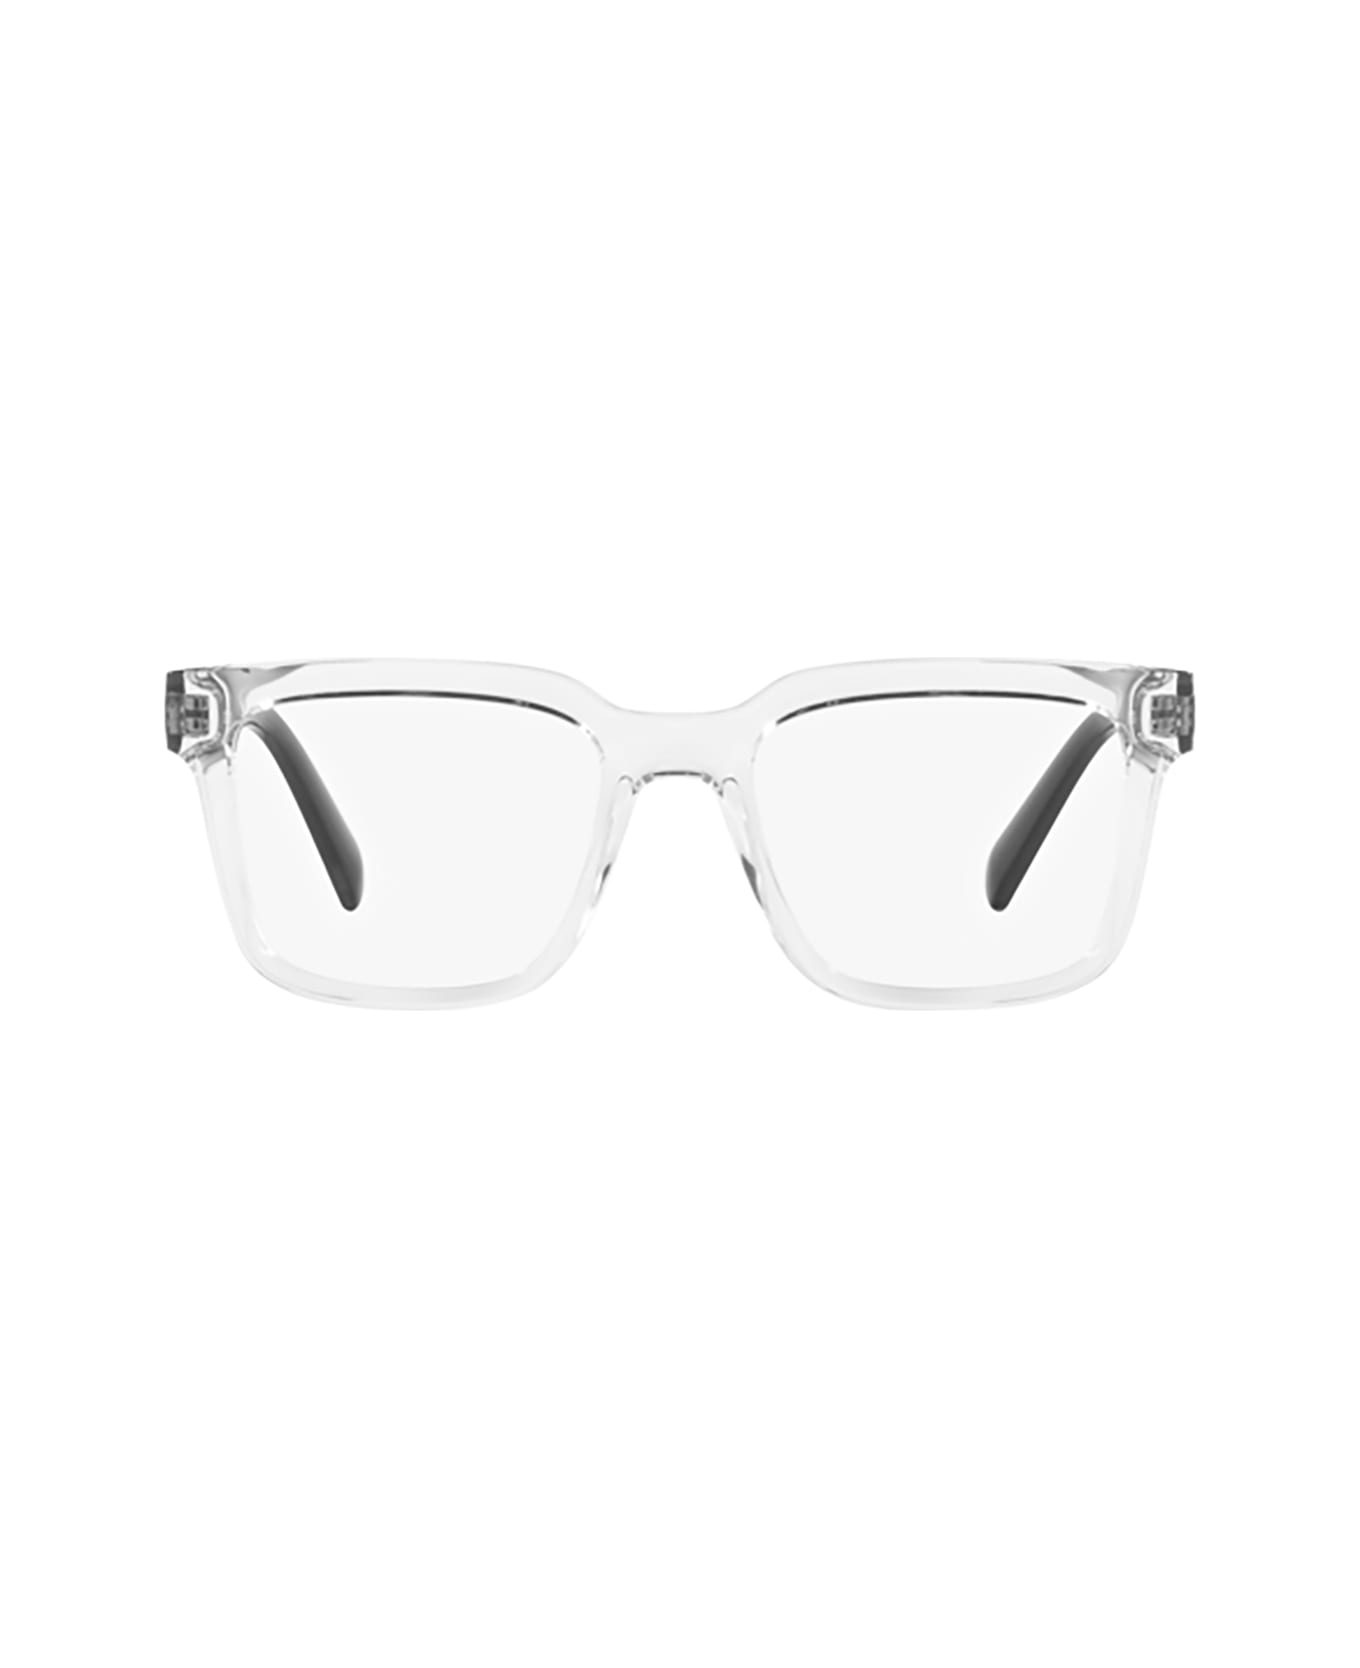 Dolce & Gabbana Eyewear Dg5101 Crystal Glasses - Crystal